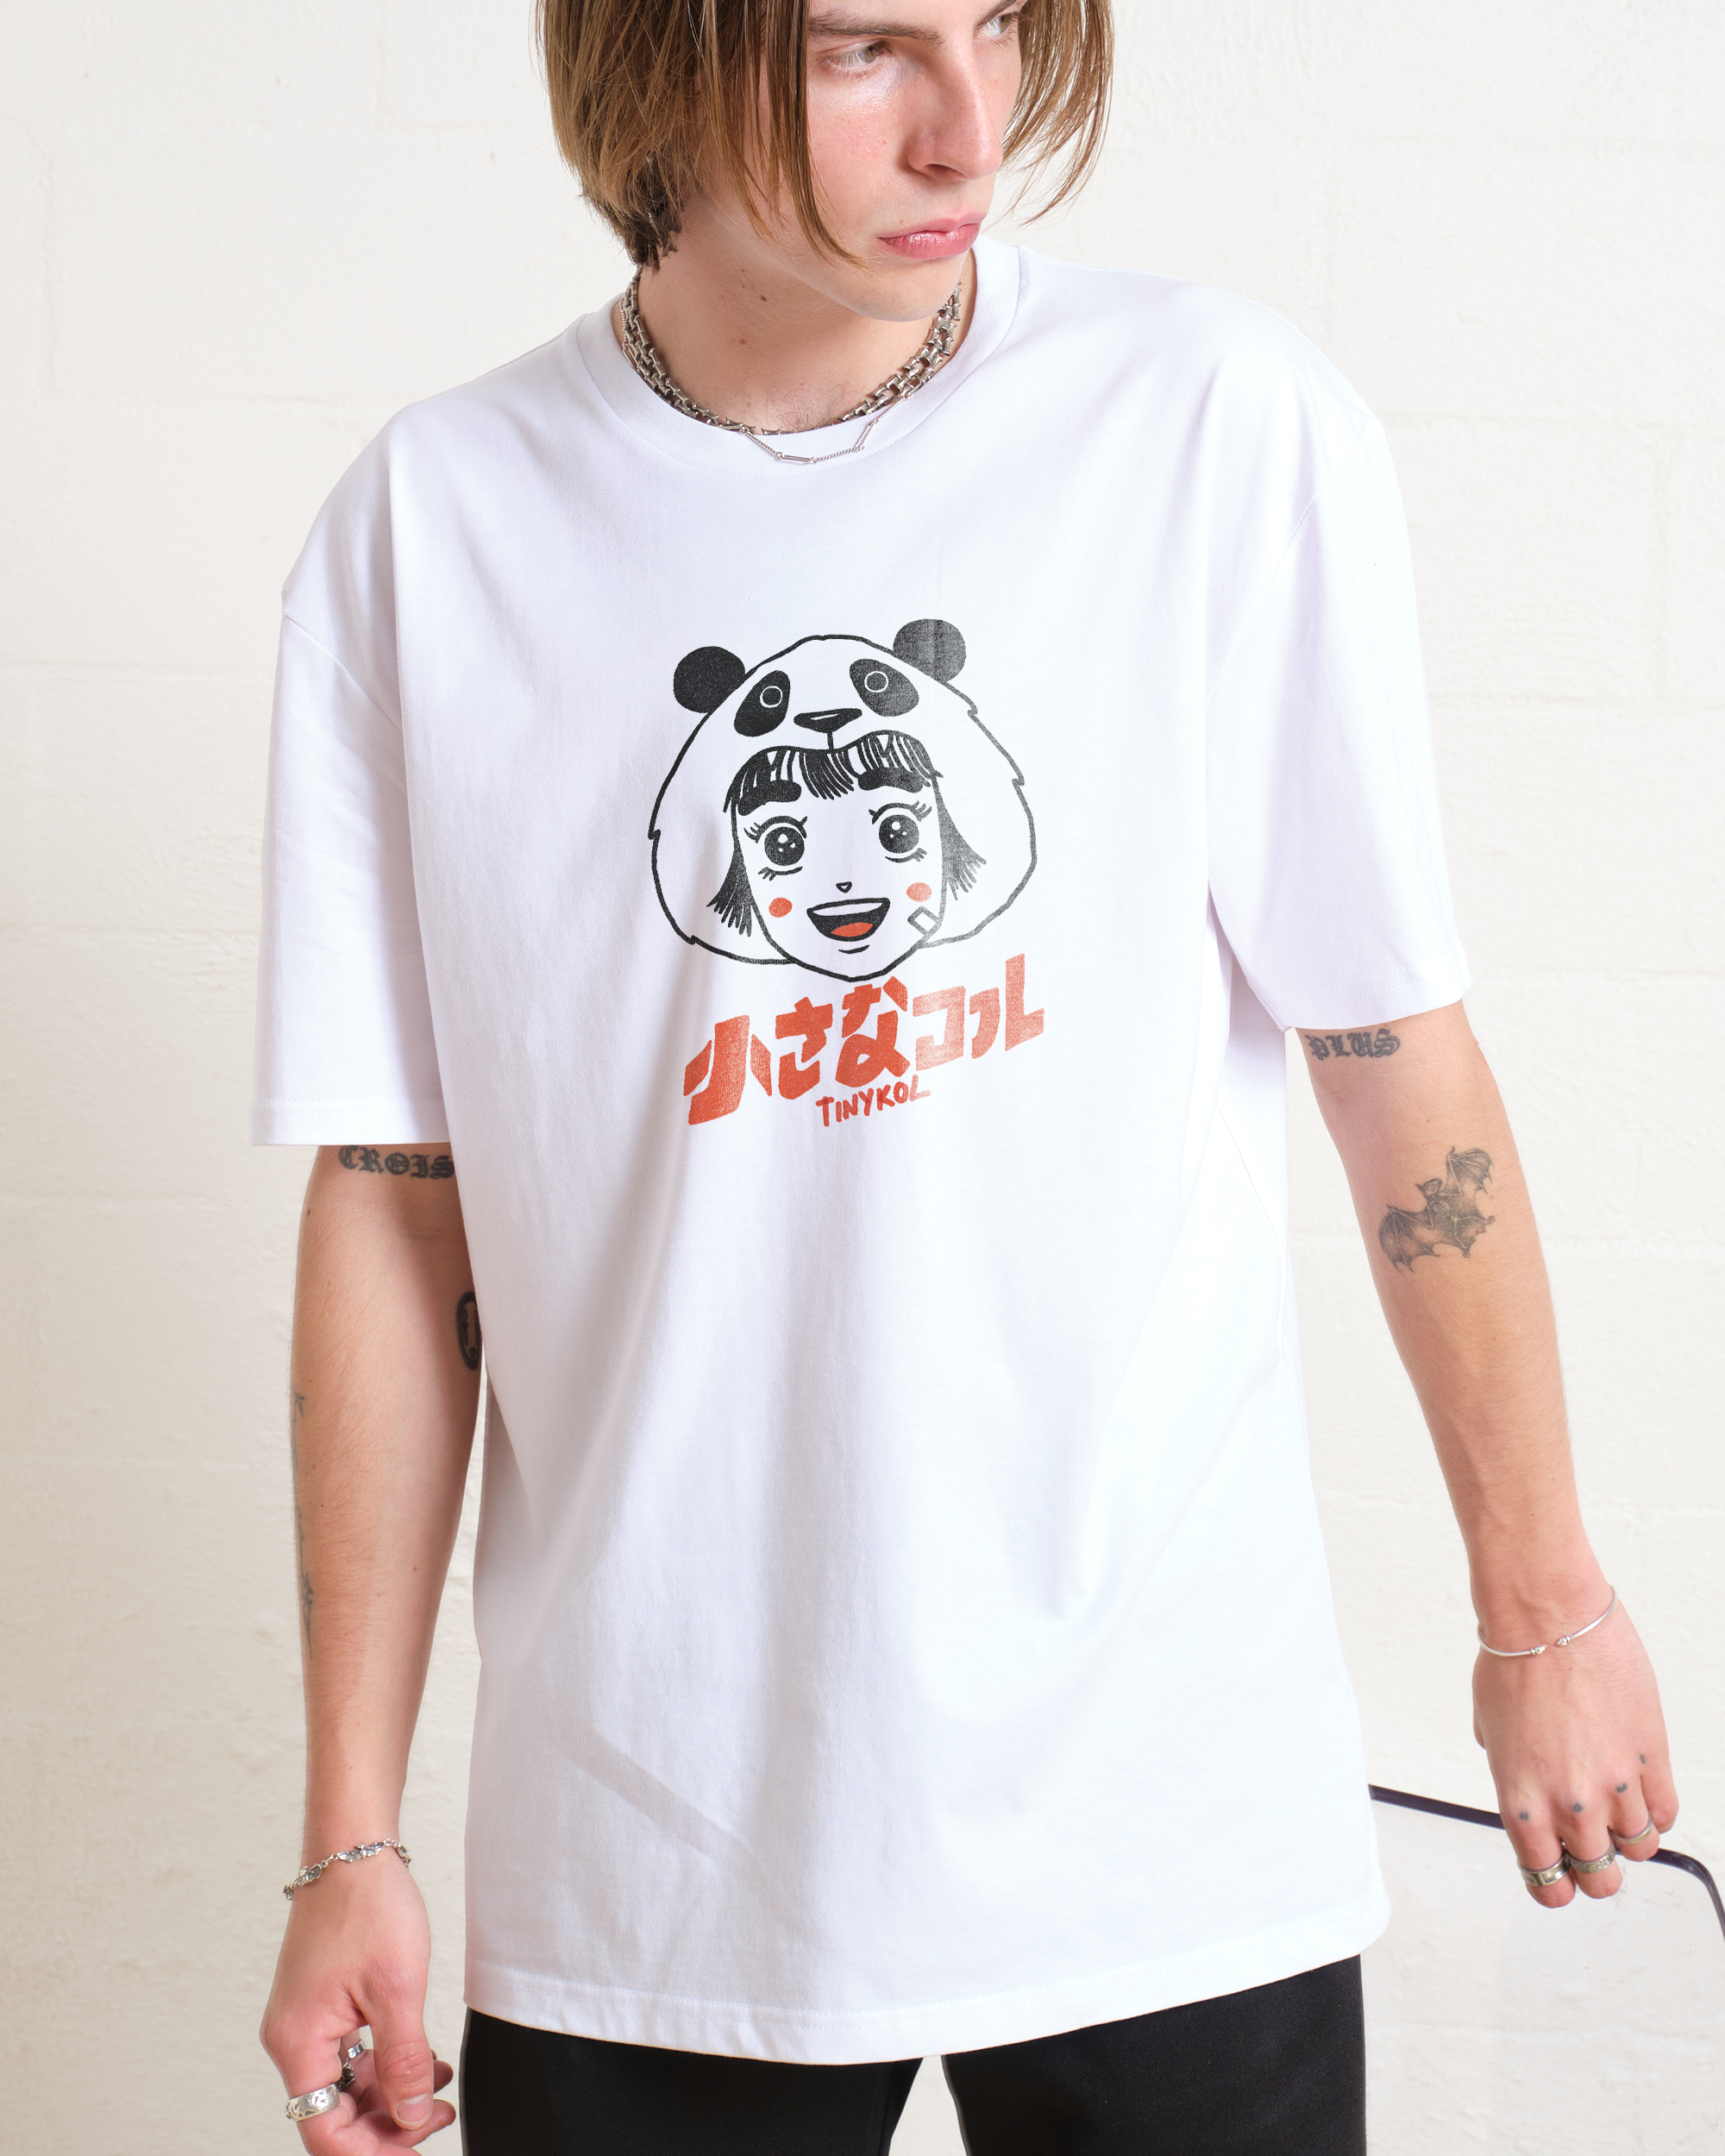 The Panda T-Shirt